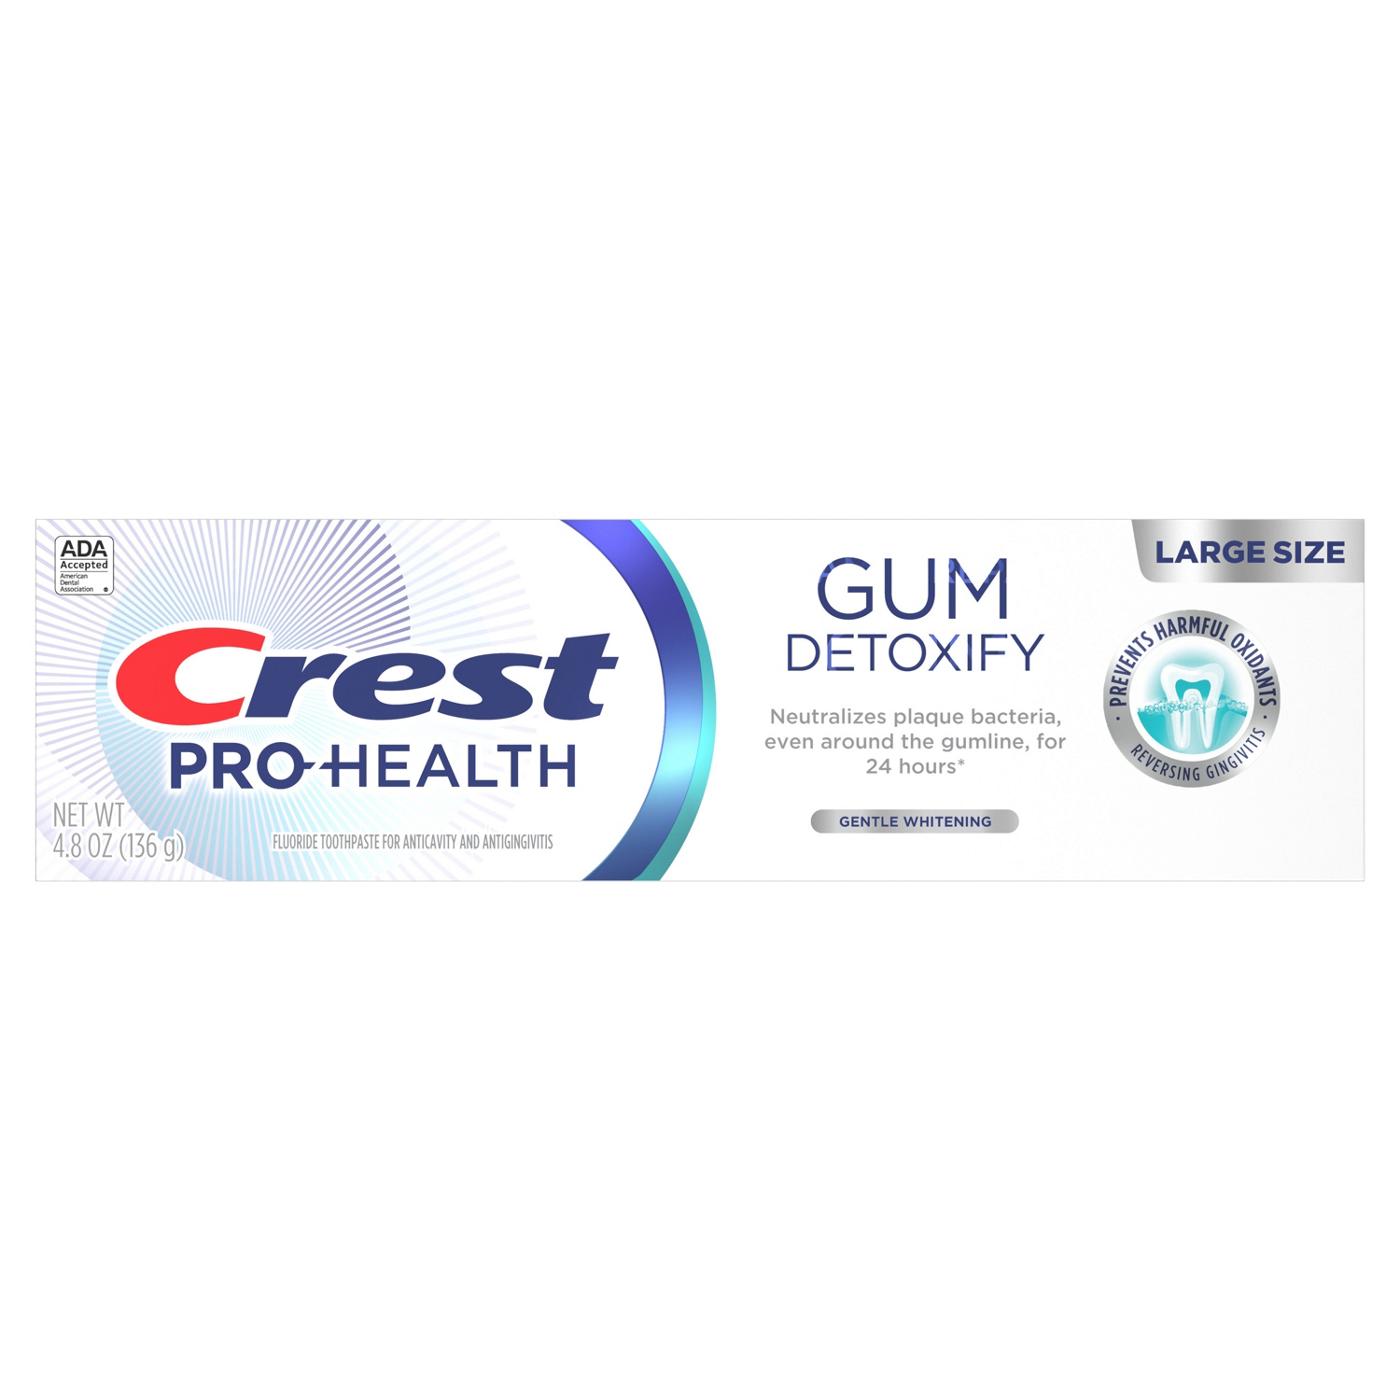 Crest Pro Health Gum Detoxify Toothpaste - Gentle Whitening; image 1 of 8